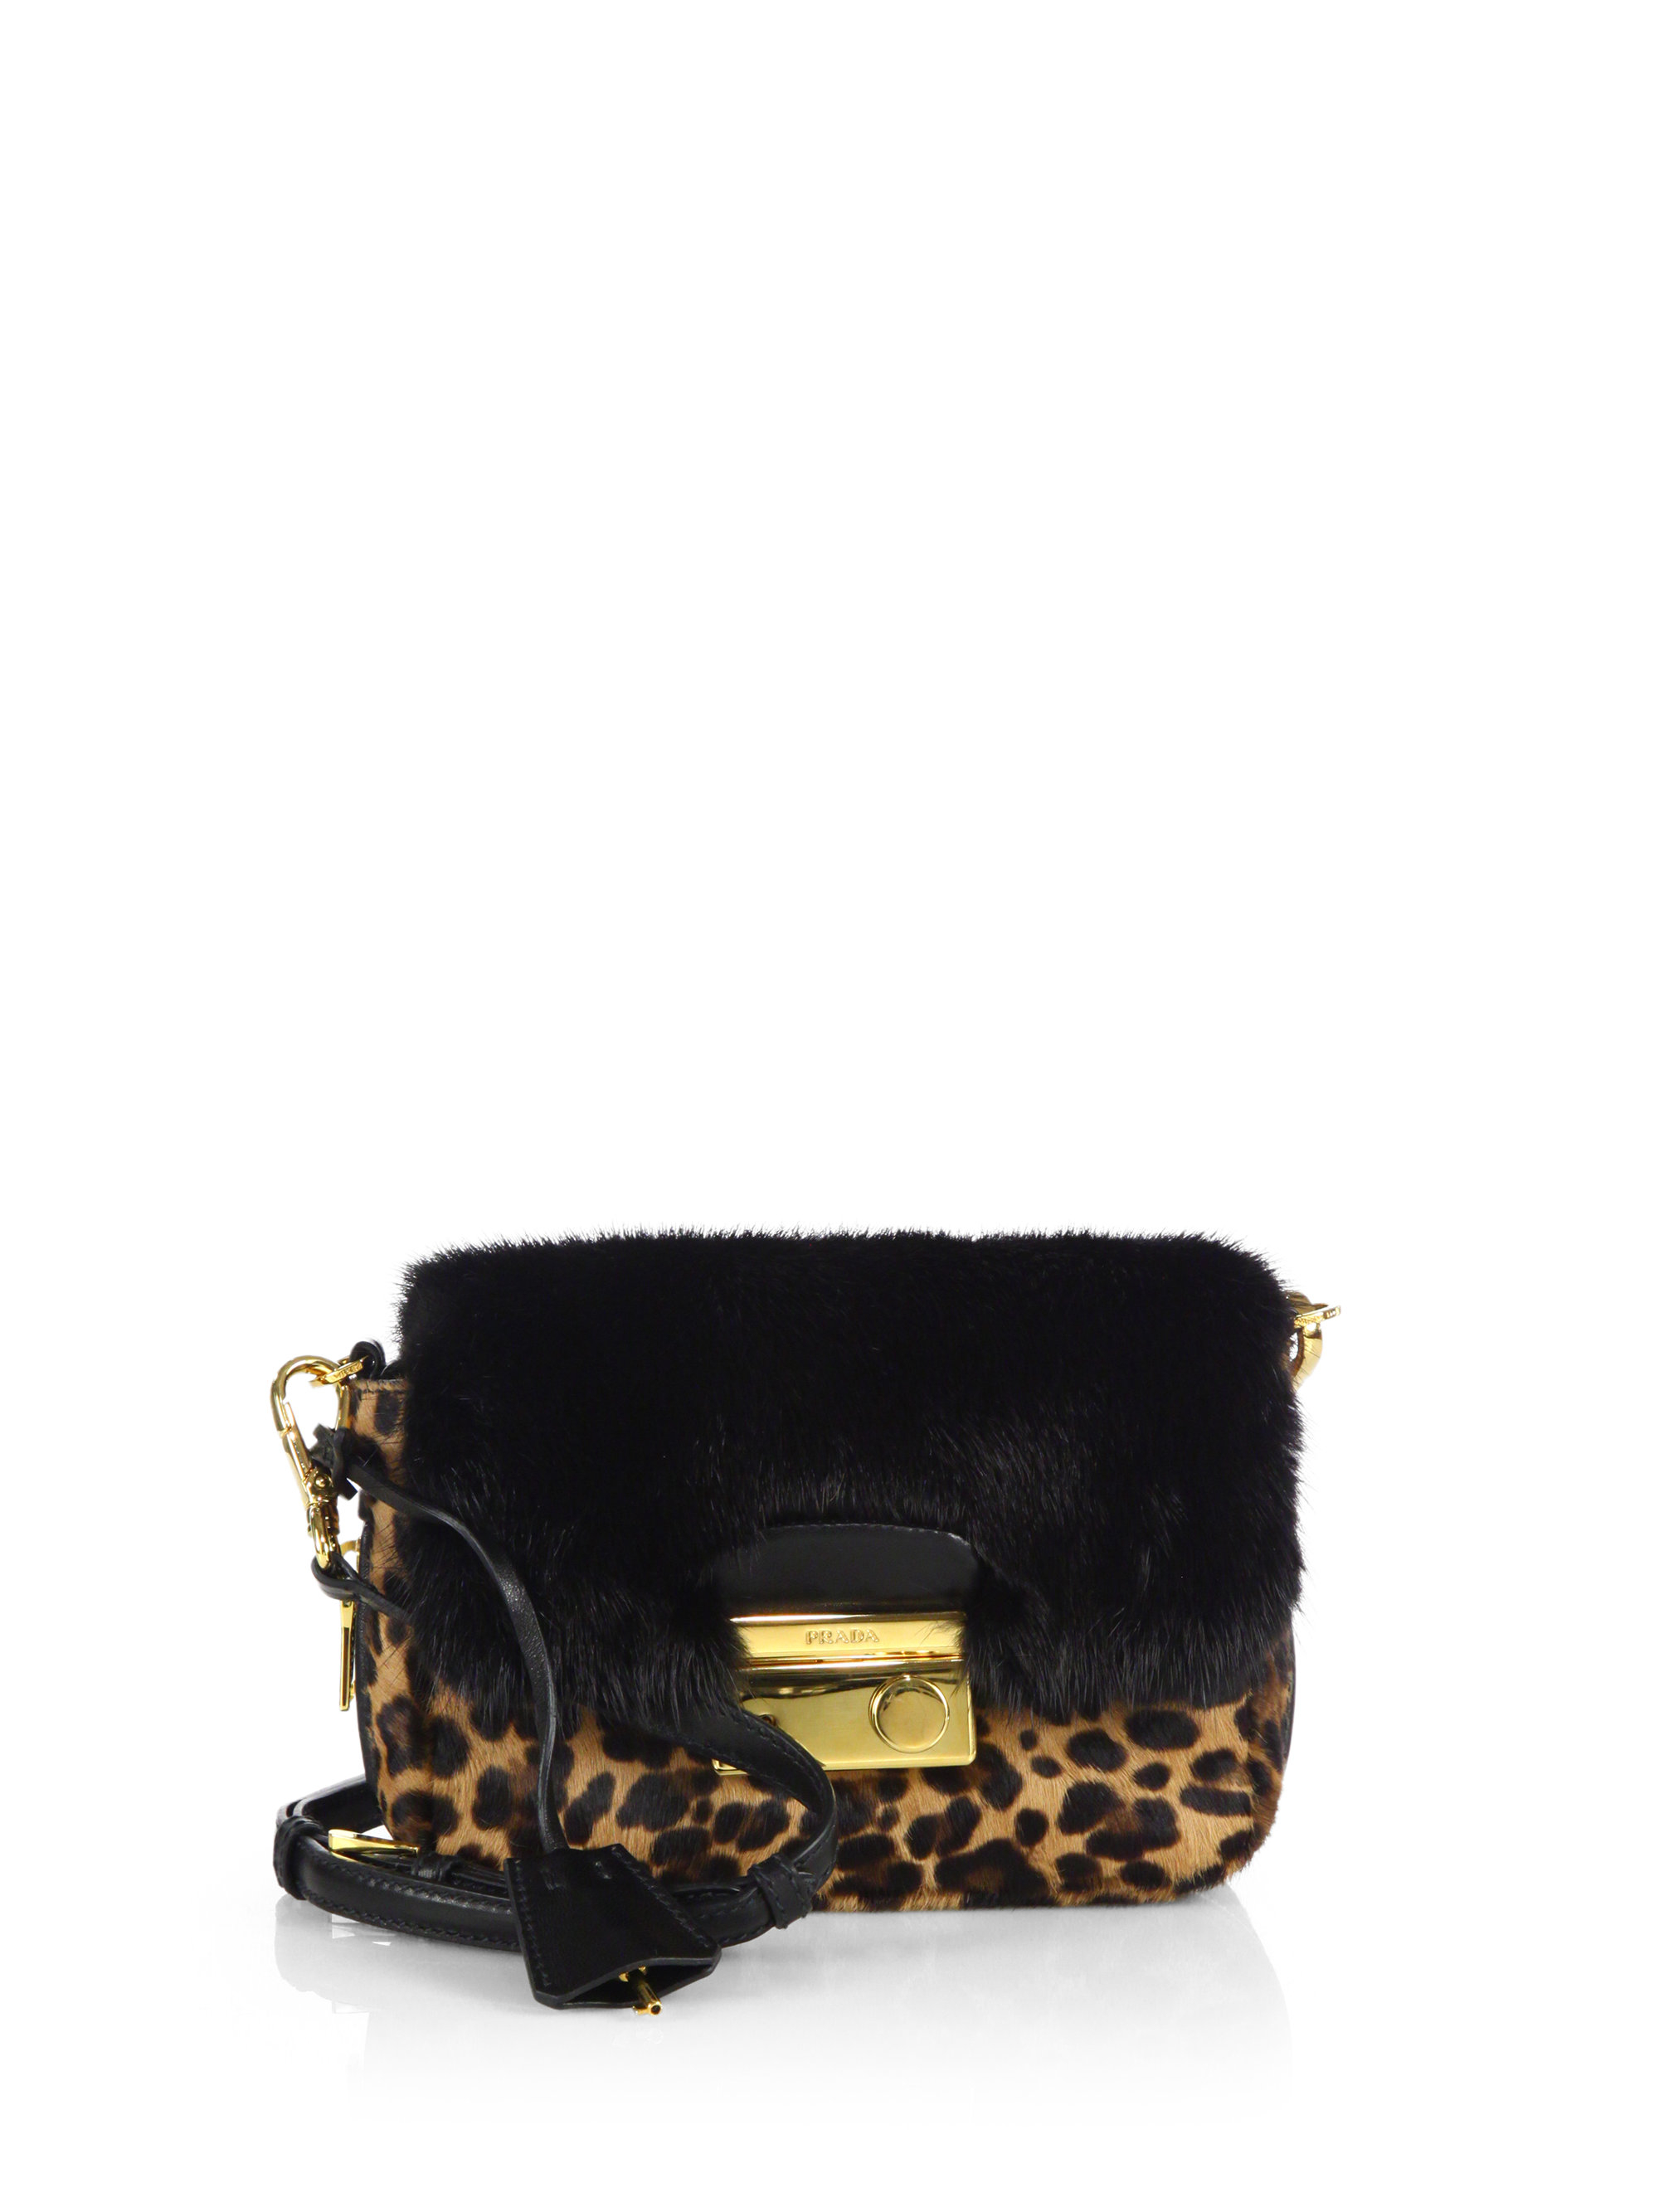 Prada Cavallino \u0026amp; Mink Fur Crossbody Bag in Black (LEOPARD) | Lyst